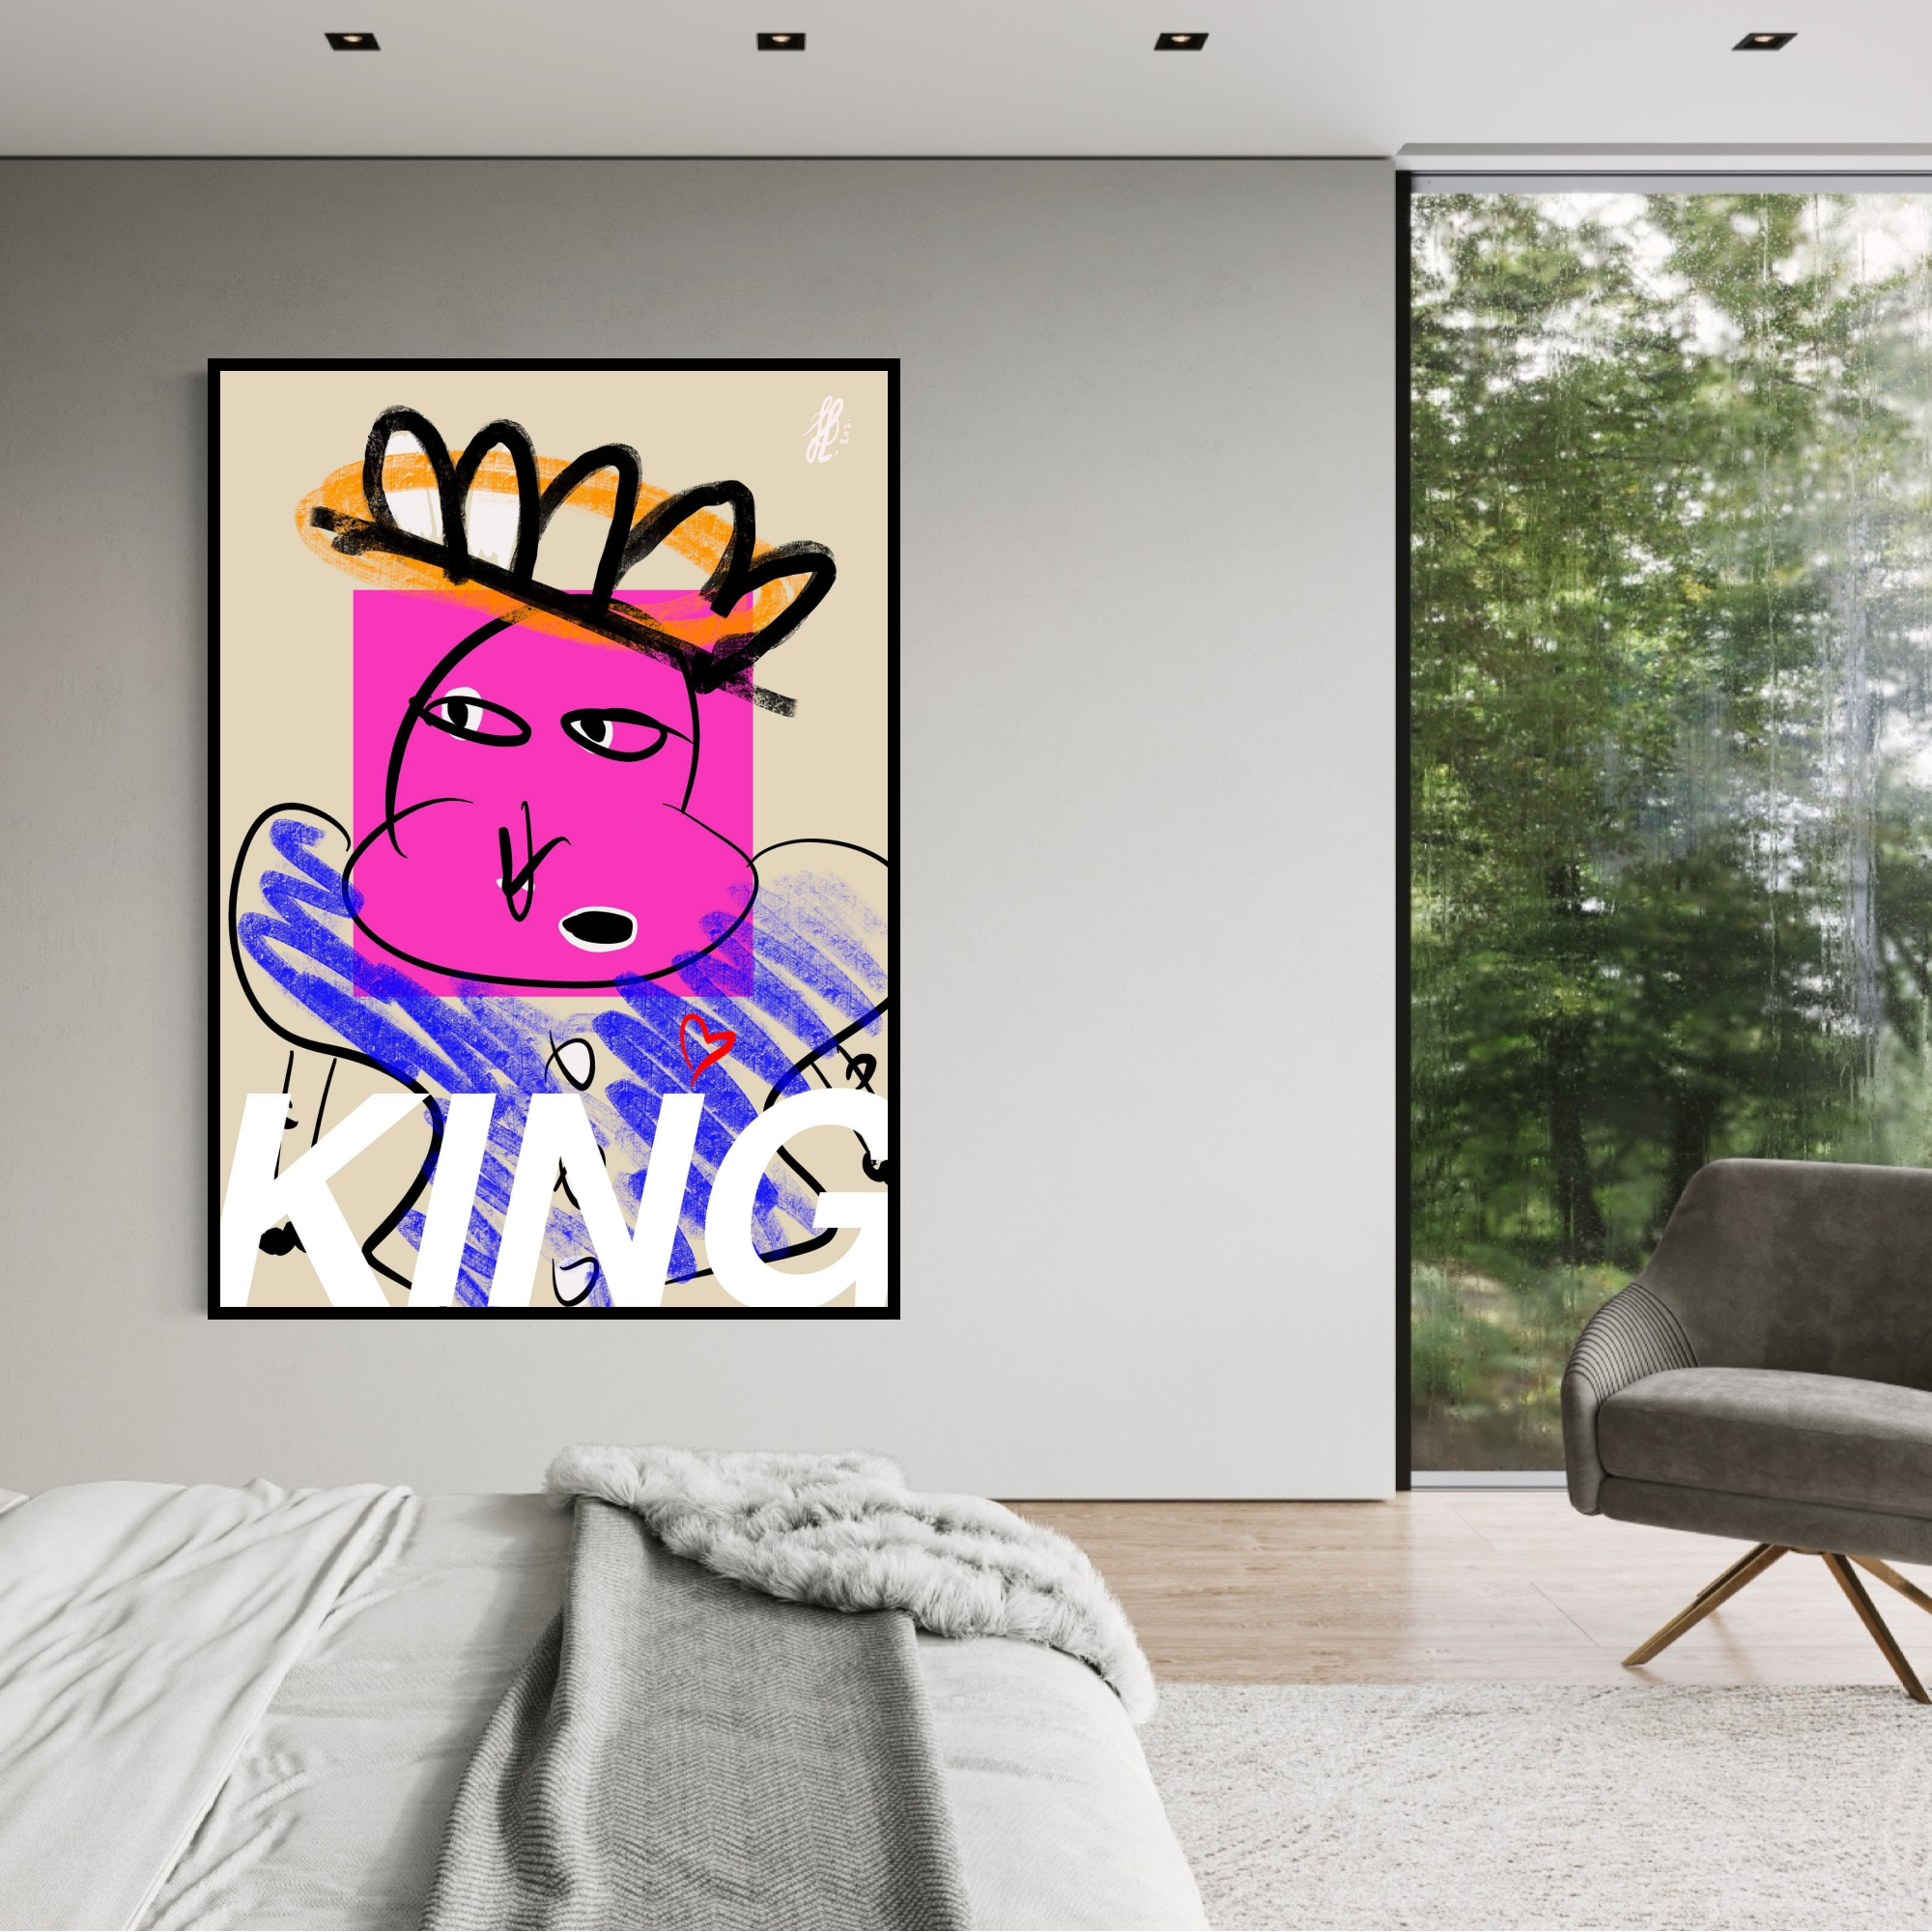 Canvas Print: "King"